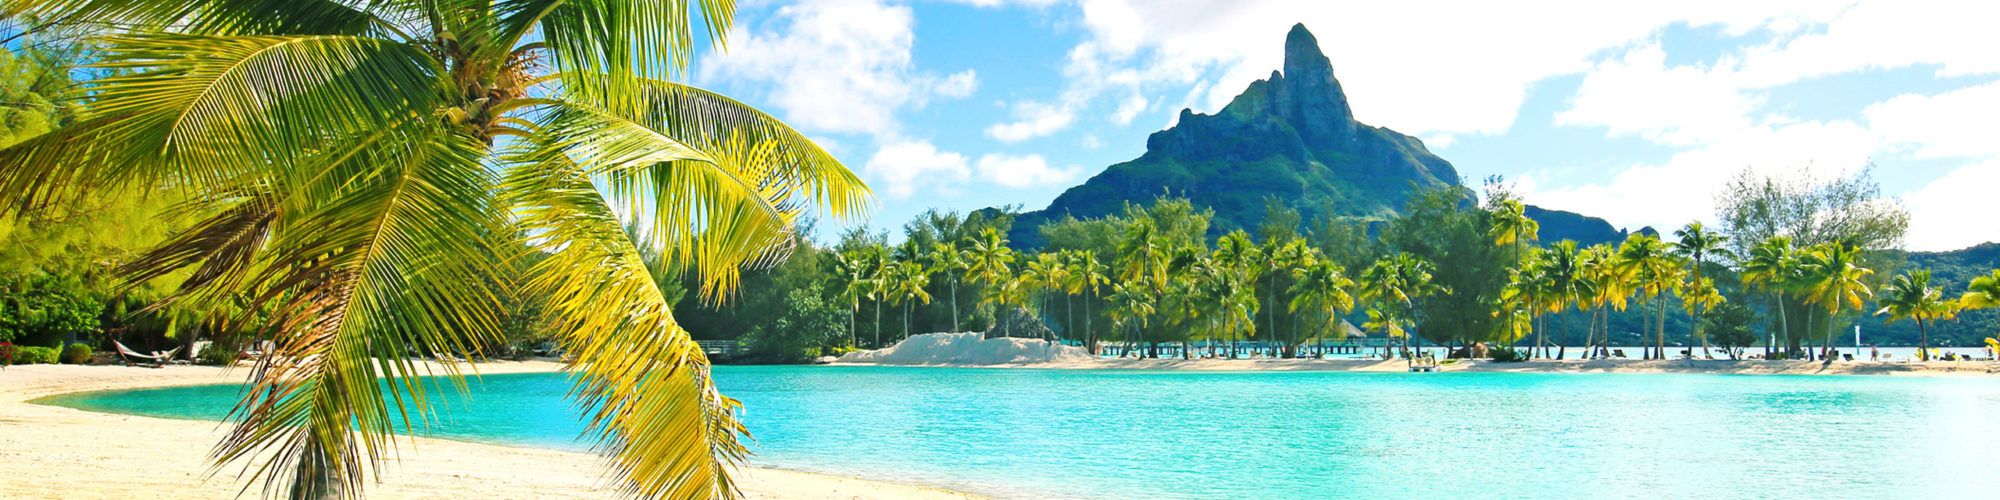 Bora Bora travel agents packages deals